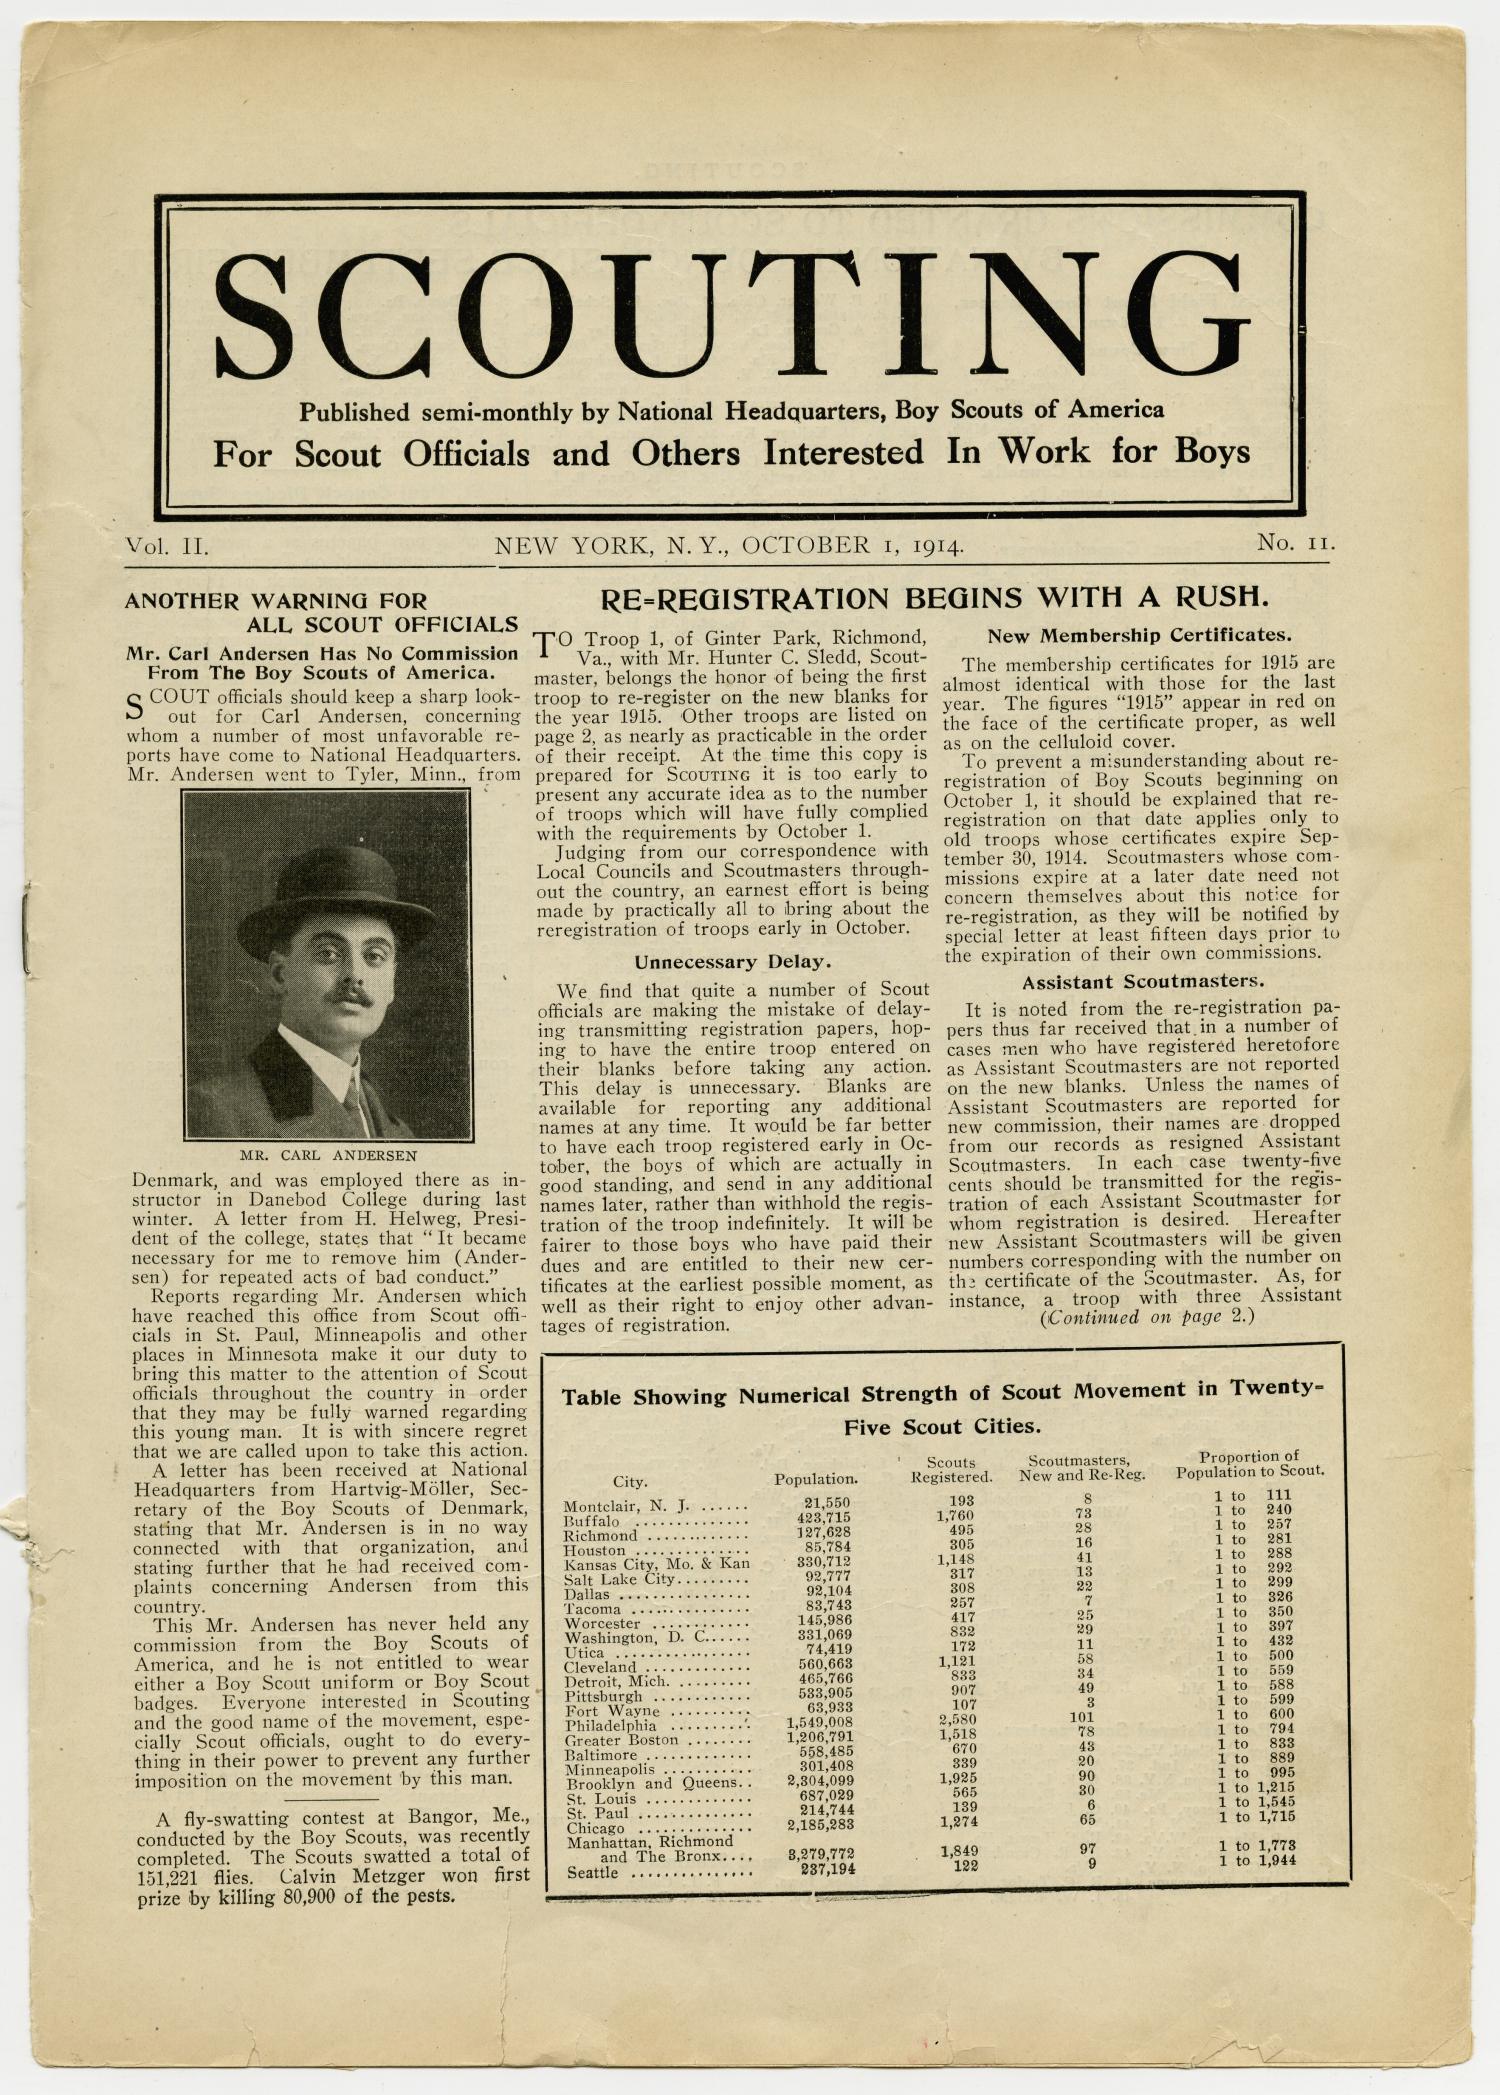 Scouting, Volume 2, Number 11, October 1, 1914
                                                
                                                    1
                                                